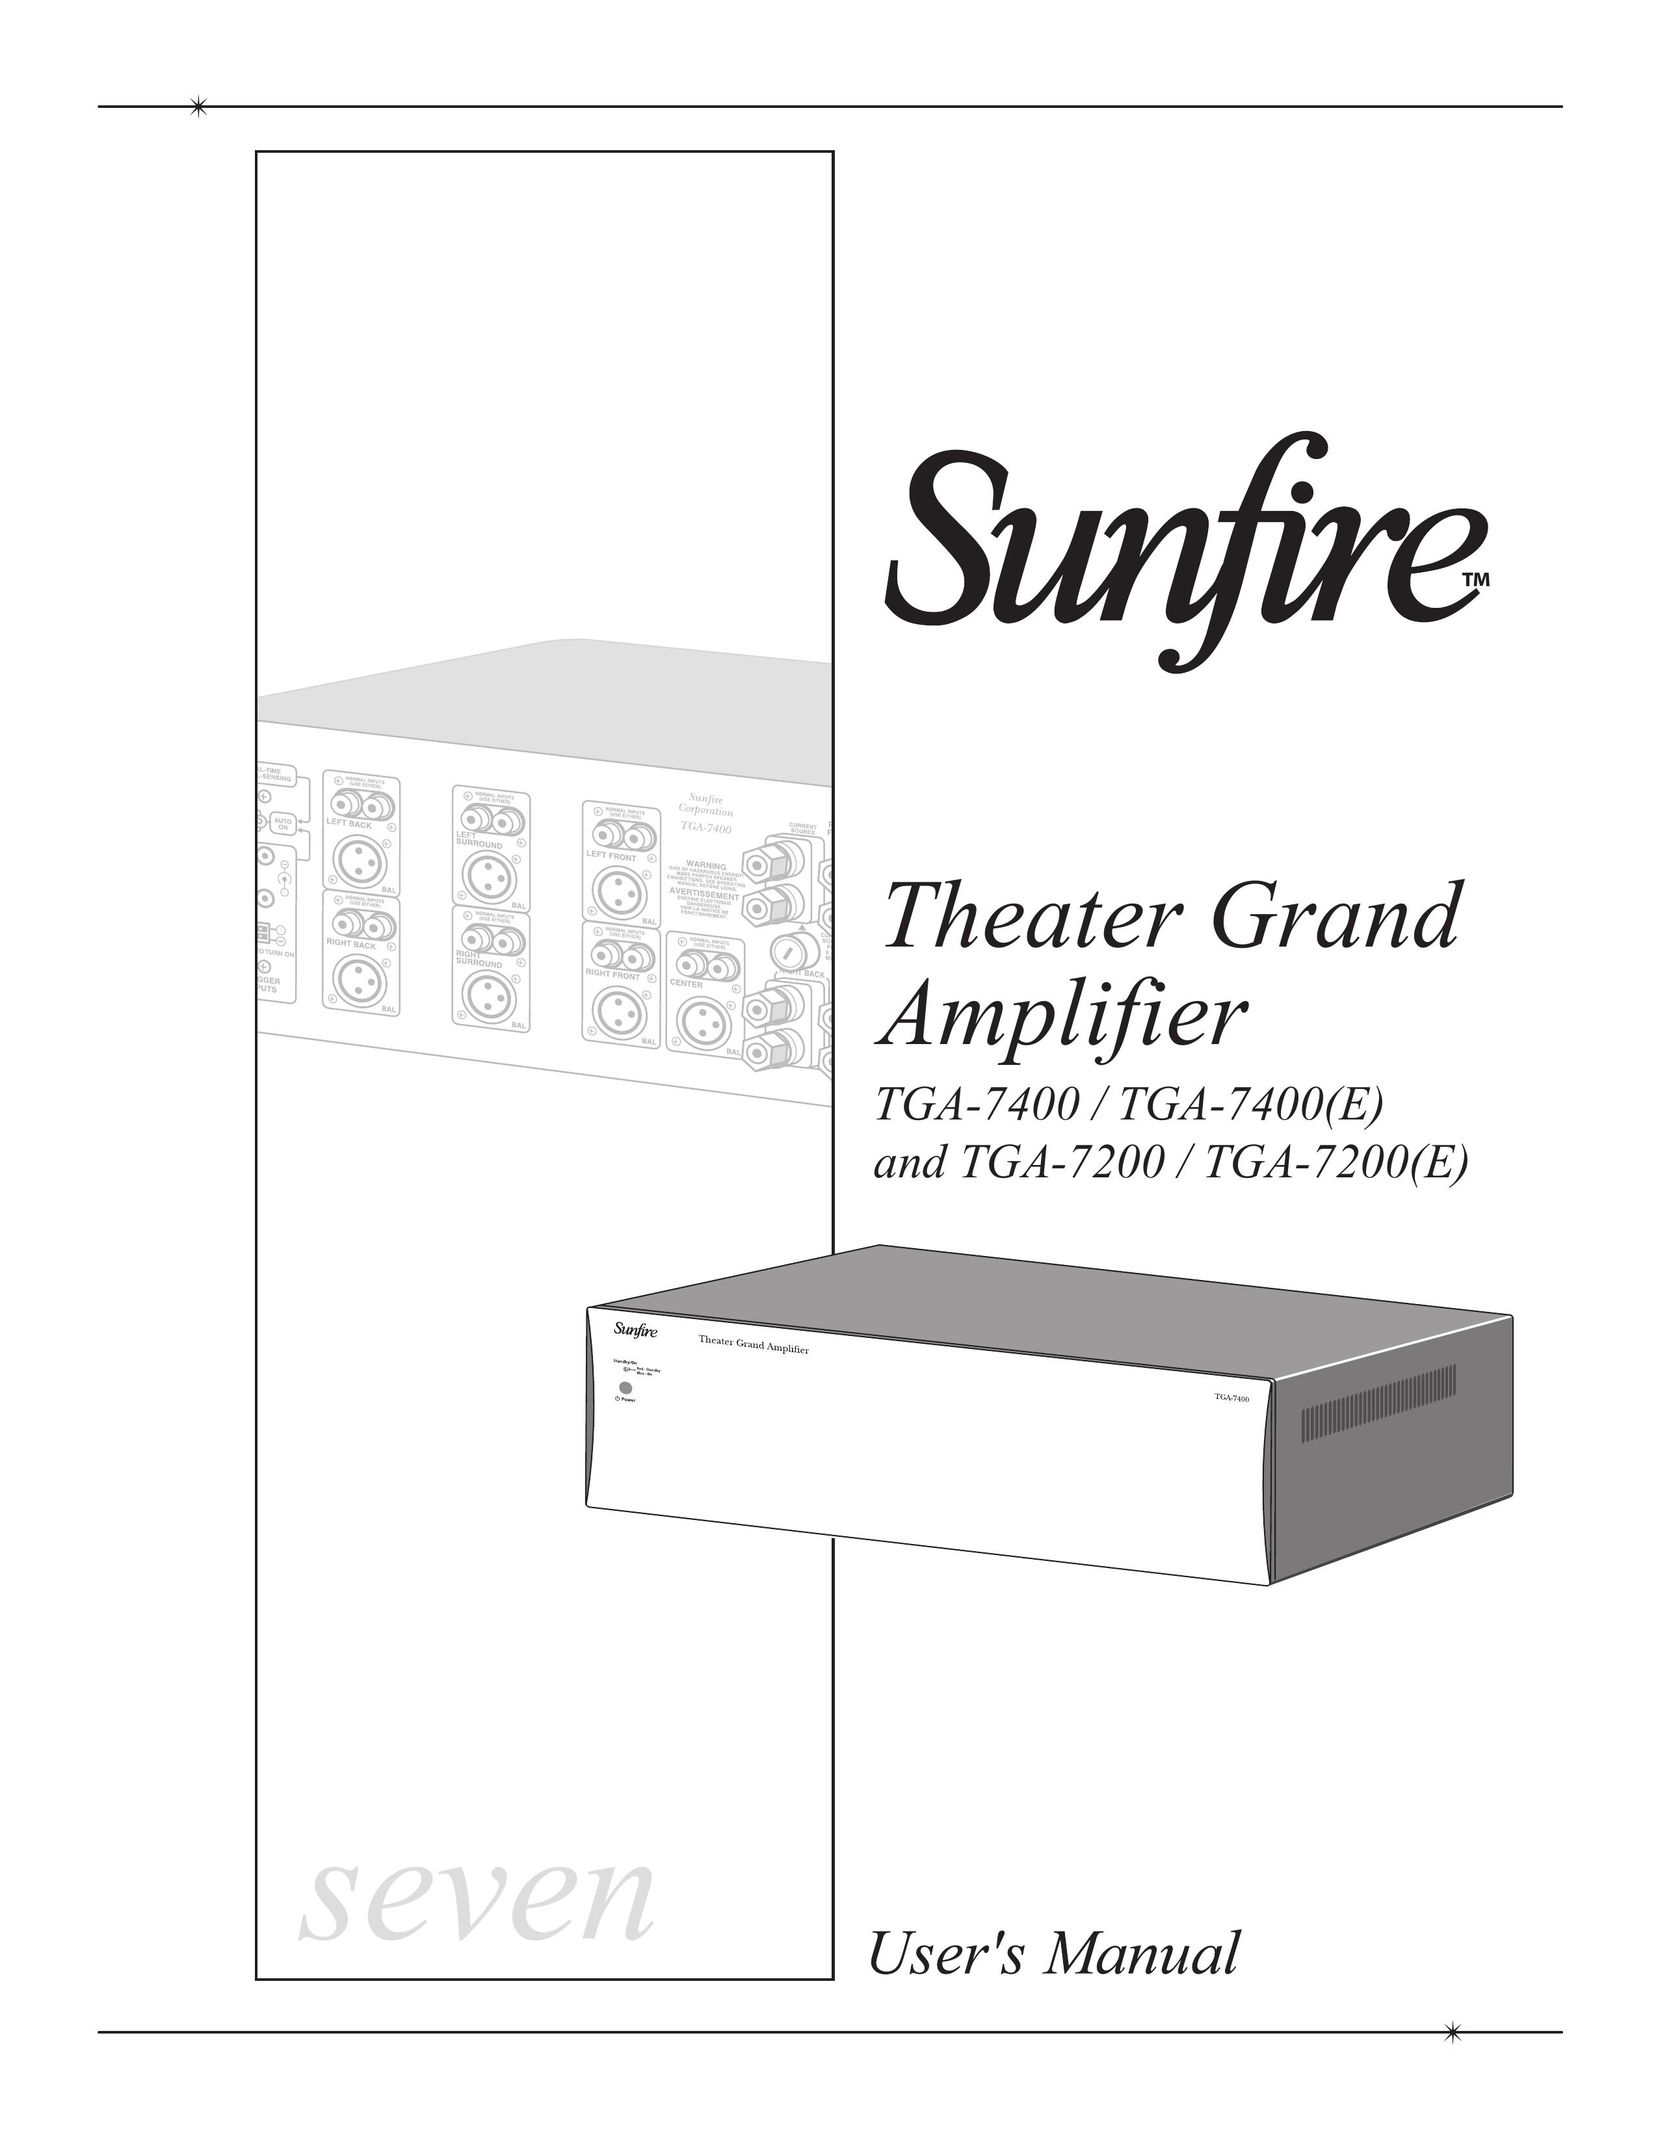 Sunfire TGA-7200 Stereo Amplifier User Manual